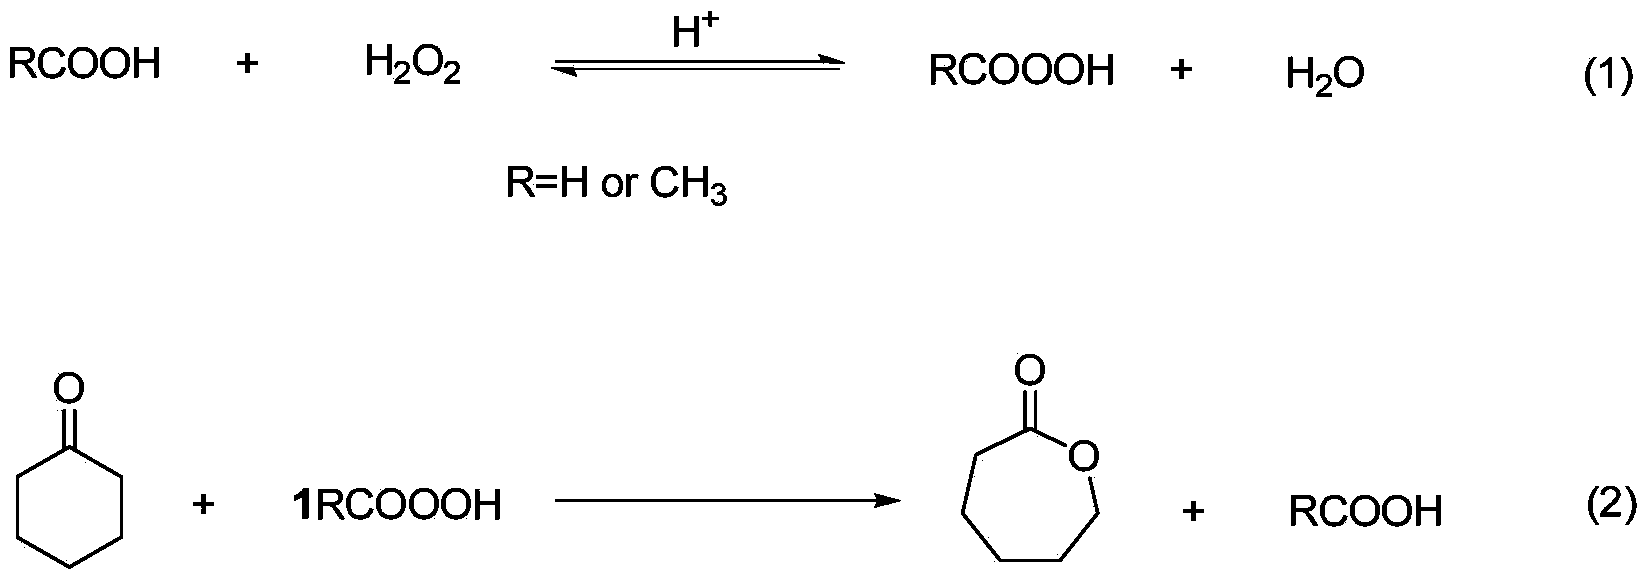 Method for preparing caprolactone through cyclohexanone catalyzed oxidation